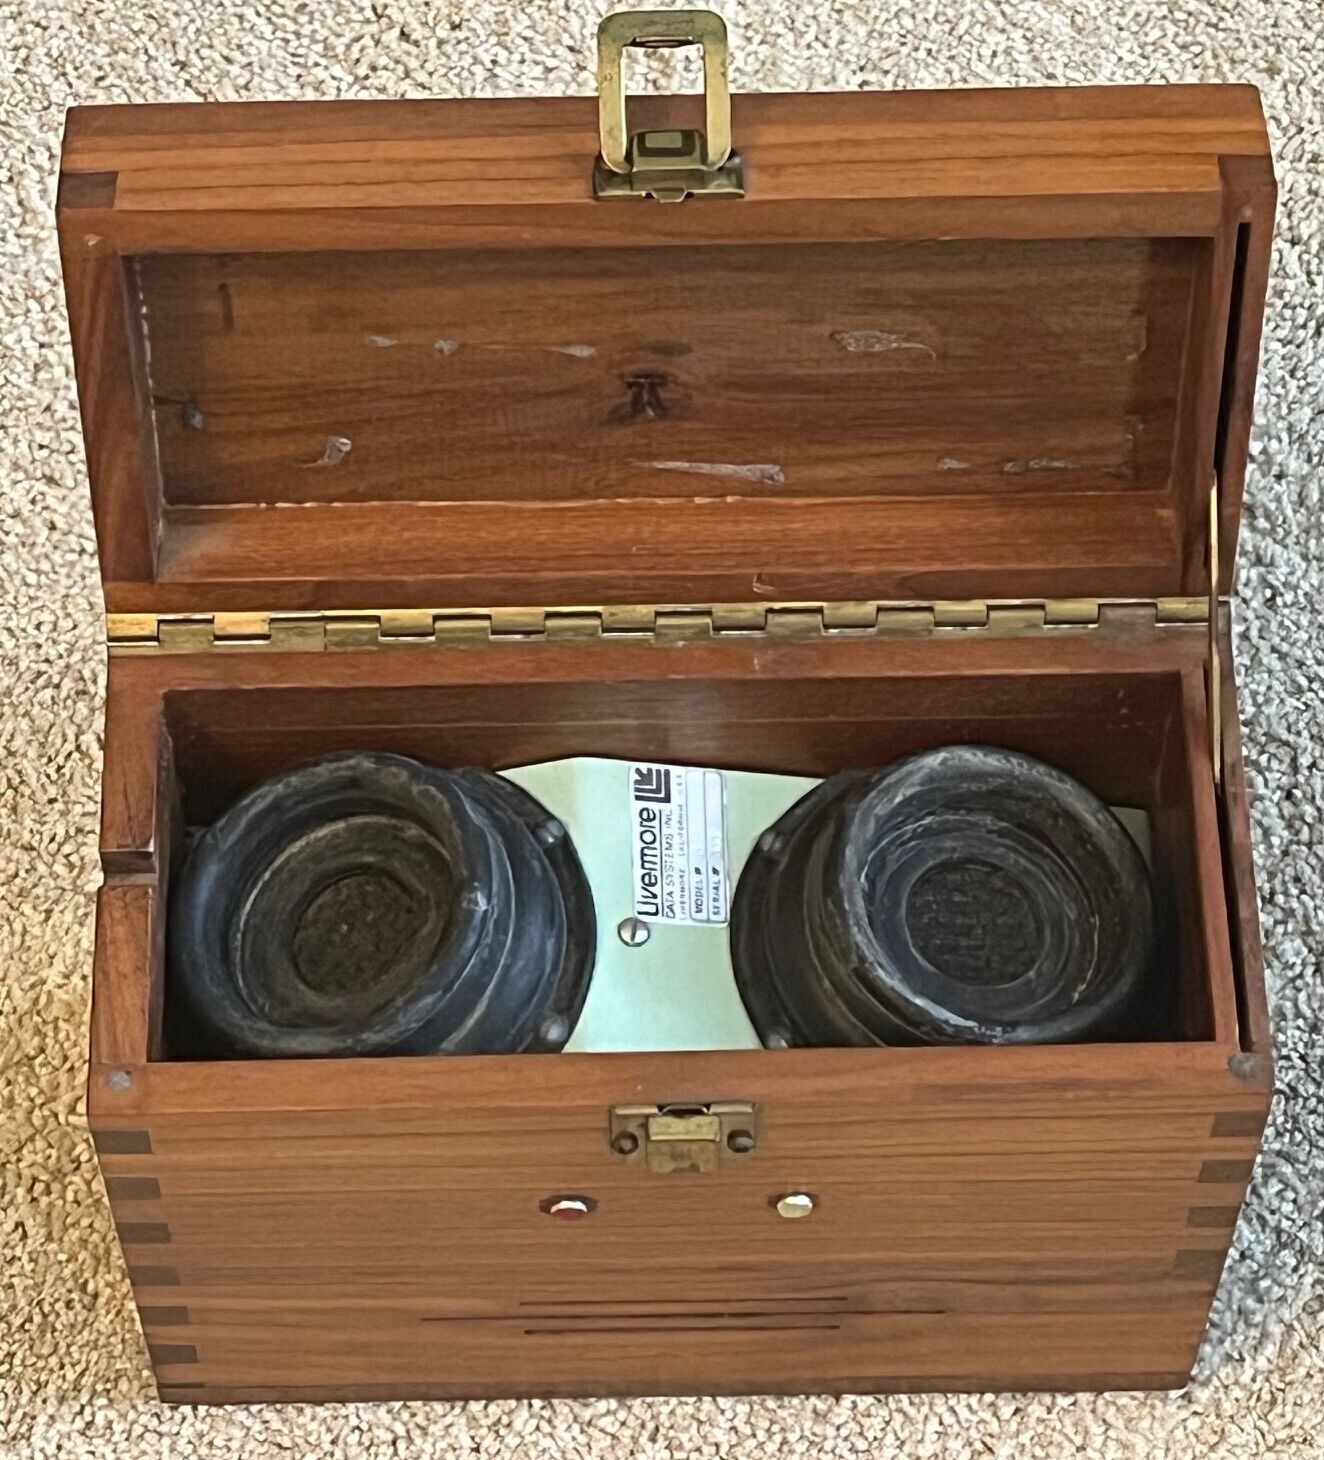 c.1970 Rare Vintage Livermore Data Acoustic Modem Model B in Wood Case